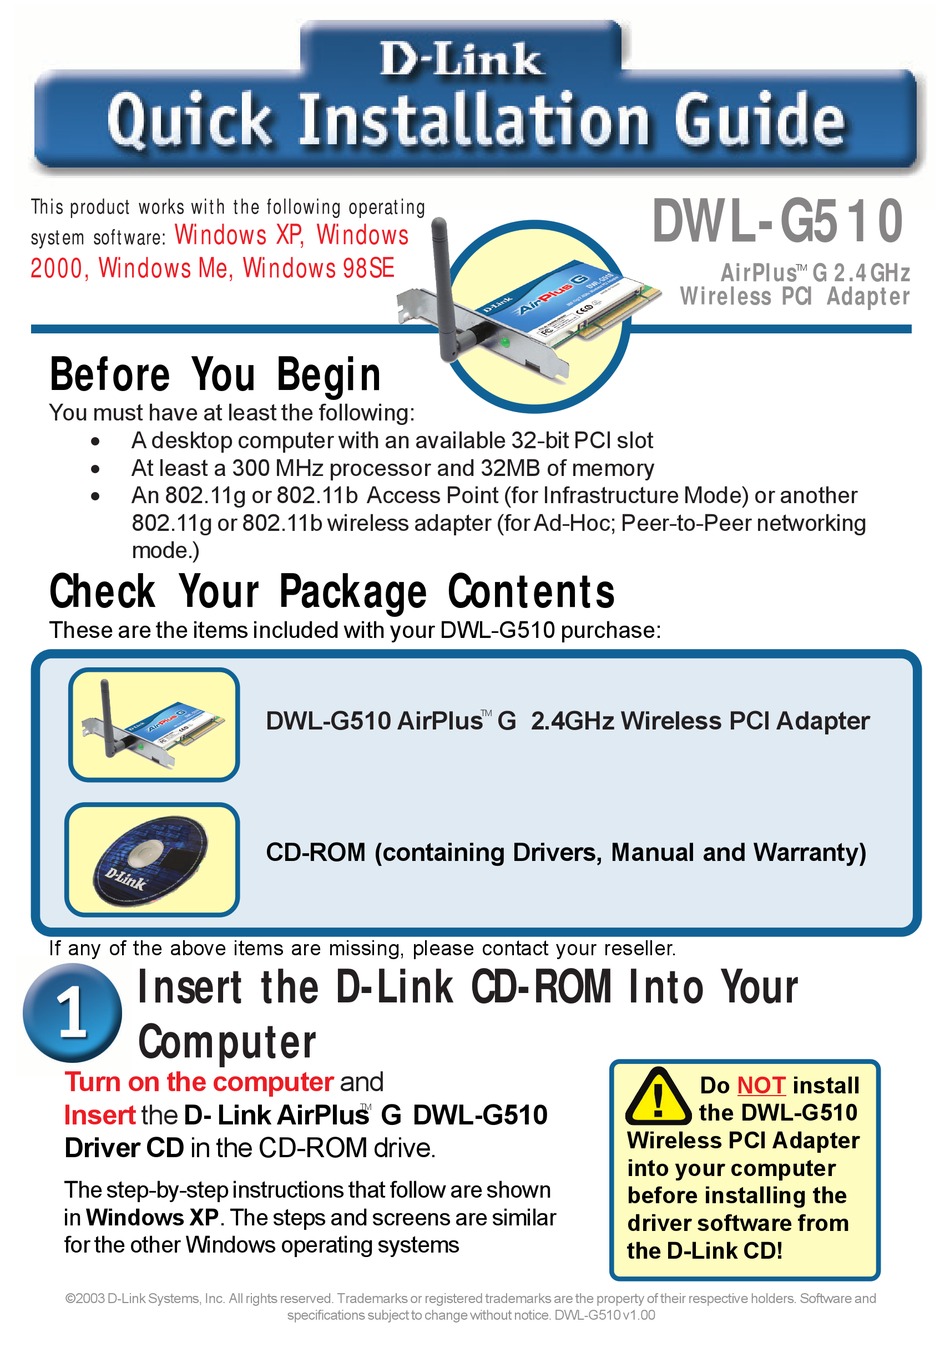 D-LINK DWL-G510 ADAPTER QUICK MANUAL ManualsLib